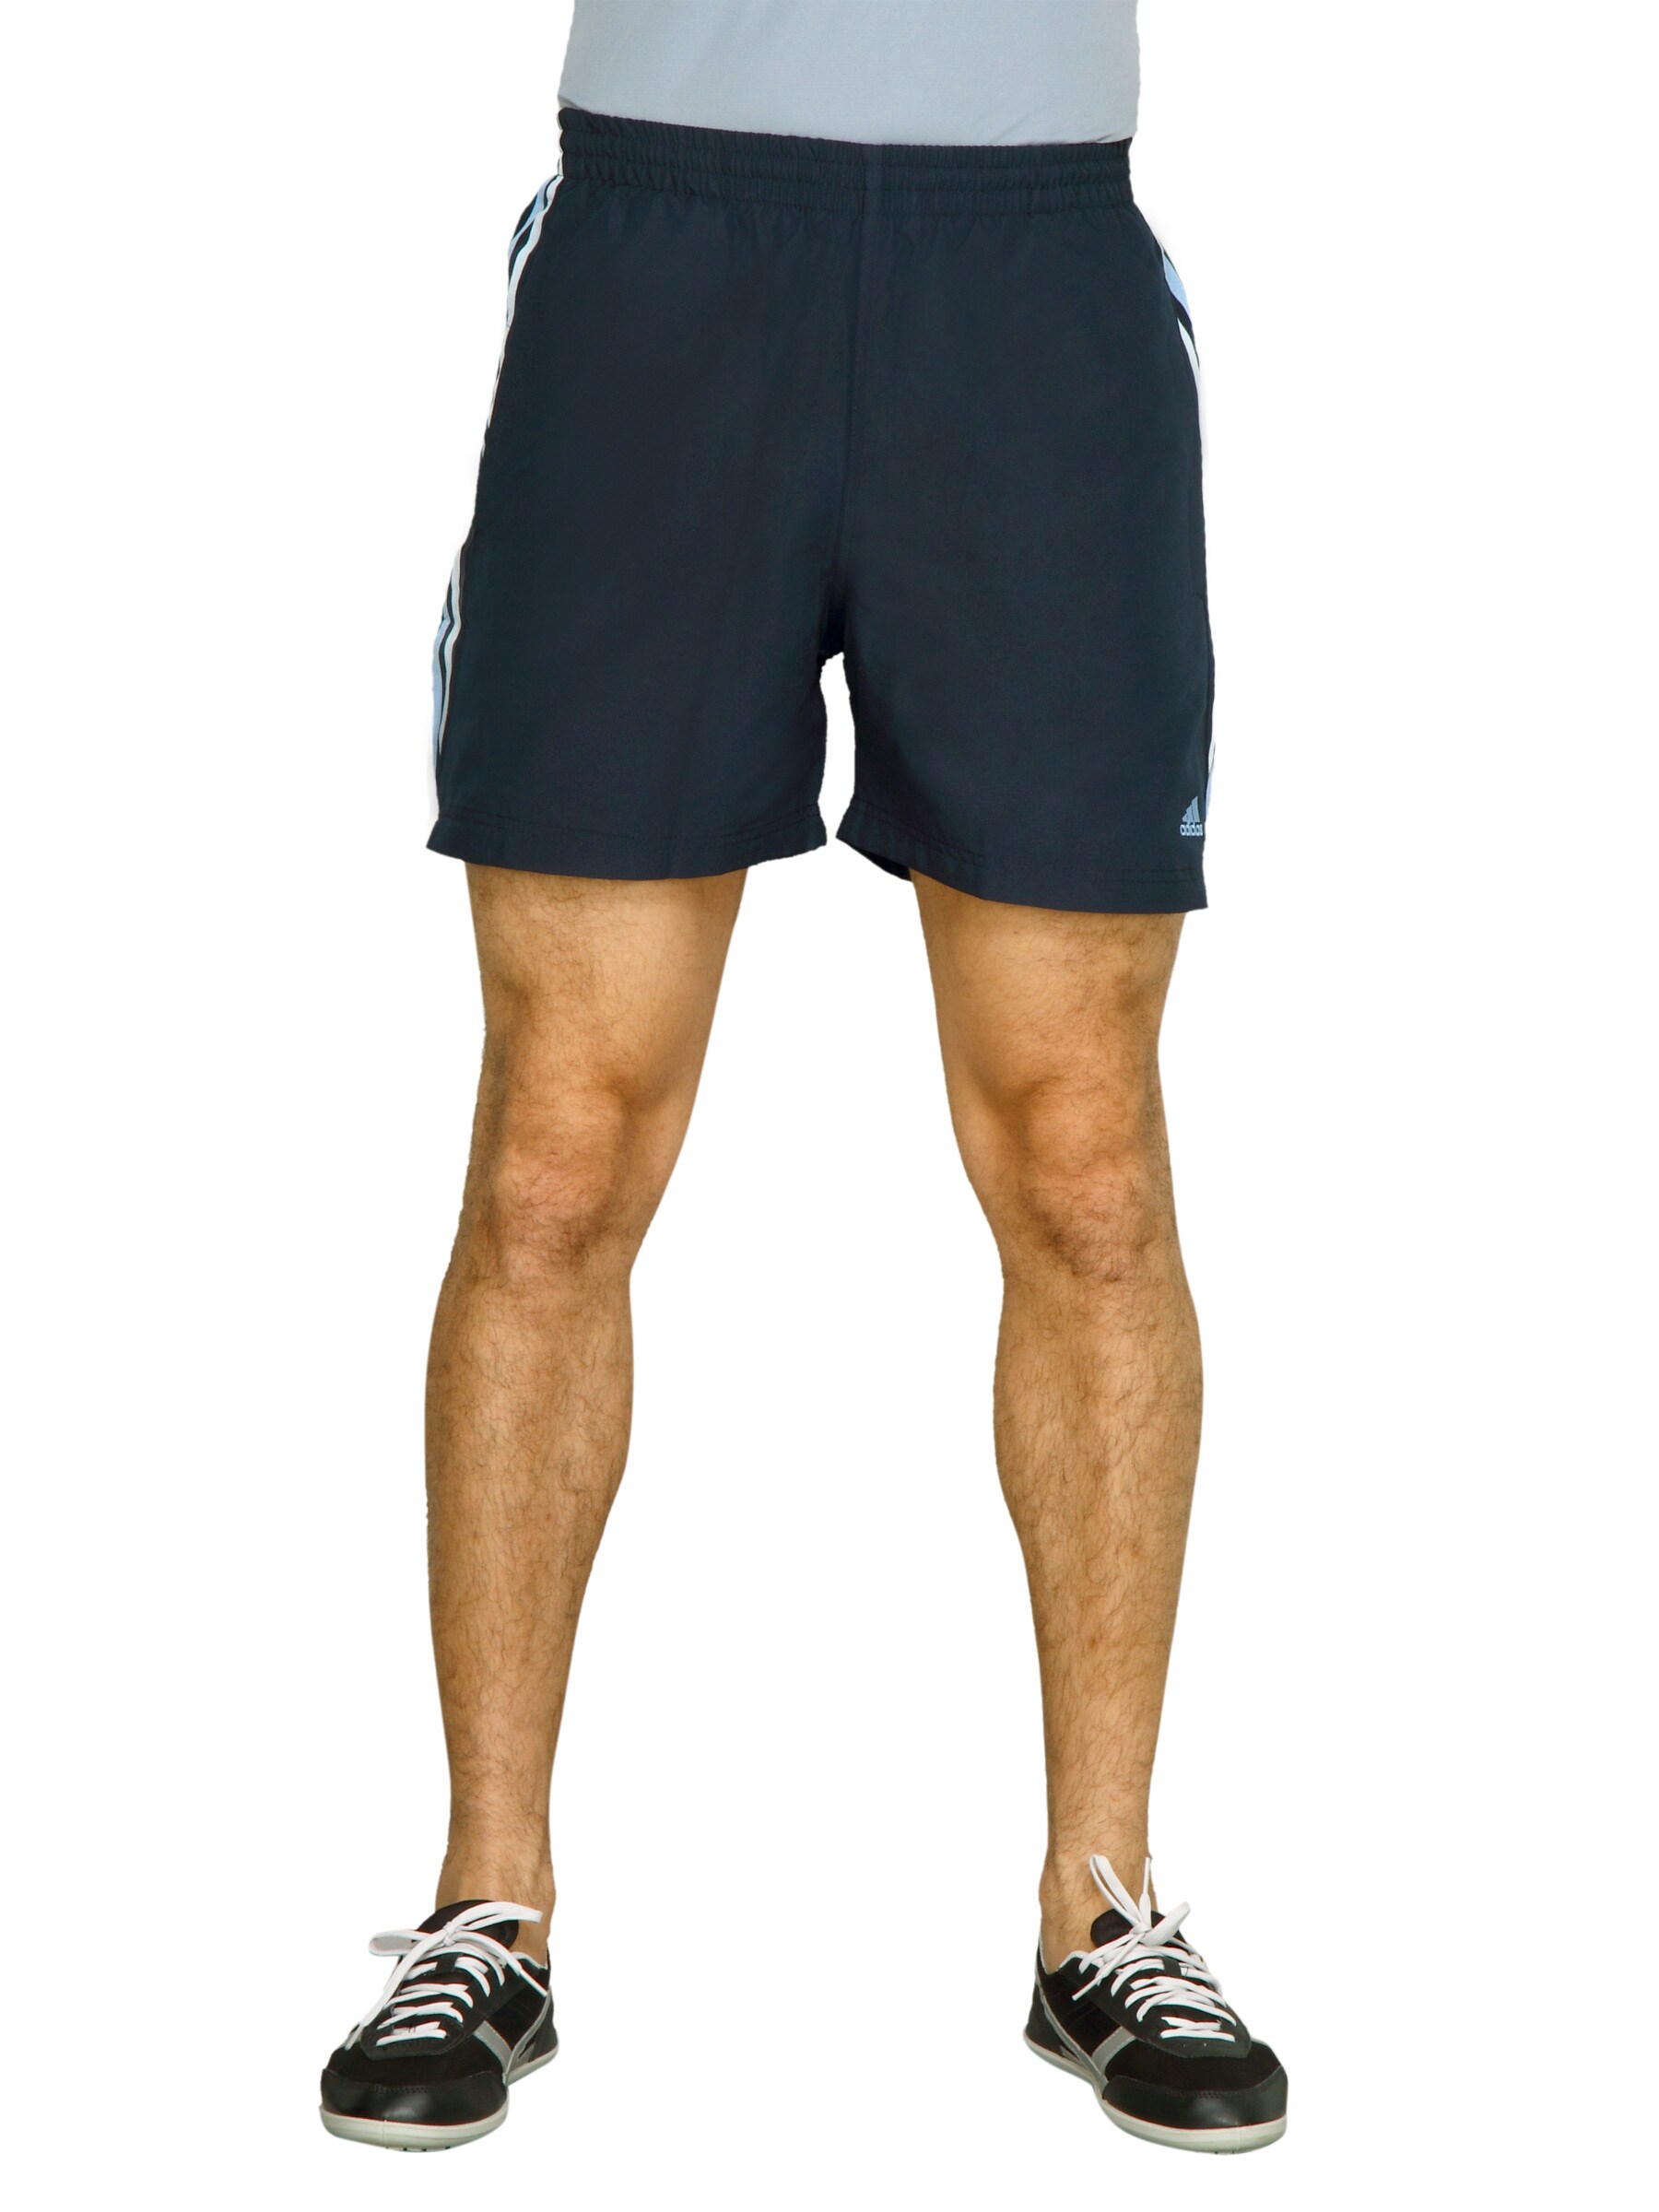 ADIDAS Men's Schelse Navy Blue Shorts